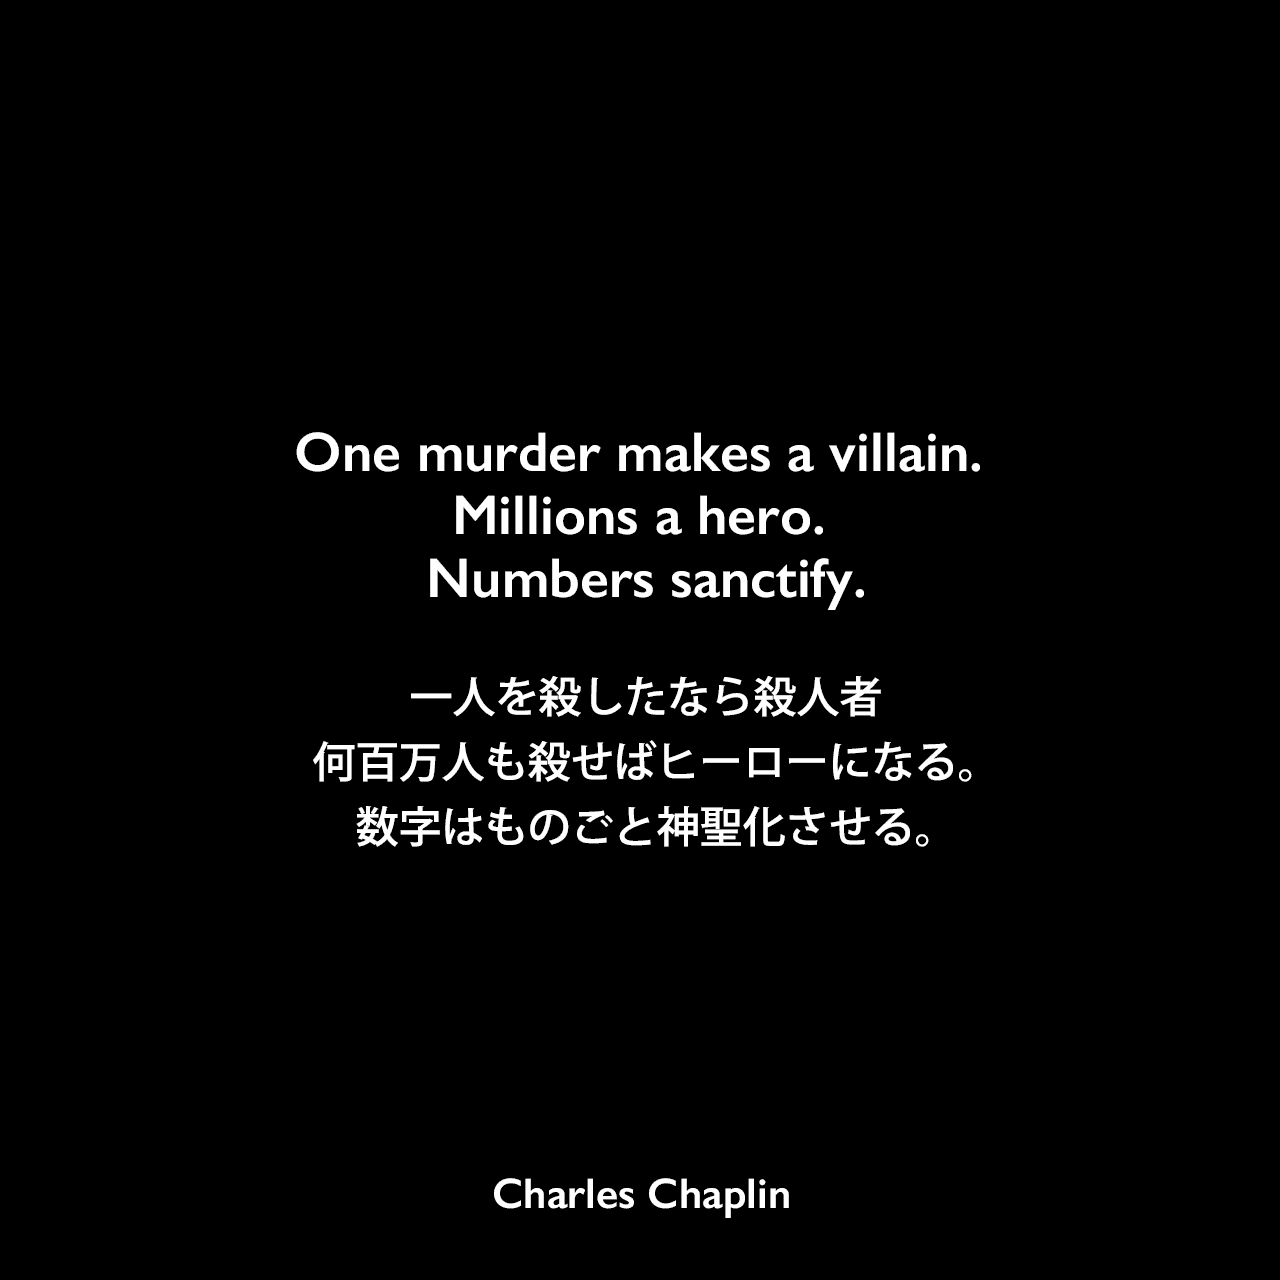 One murder makes a villain. Millions a hero. Numbers sanctify.一人を殺したなら殺人者、何百万人も殺せばヒーローになる。数字はものごと神聖化させる。- 映画「殺人狂時代」のセリフよりCharles Chaplin